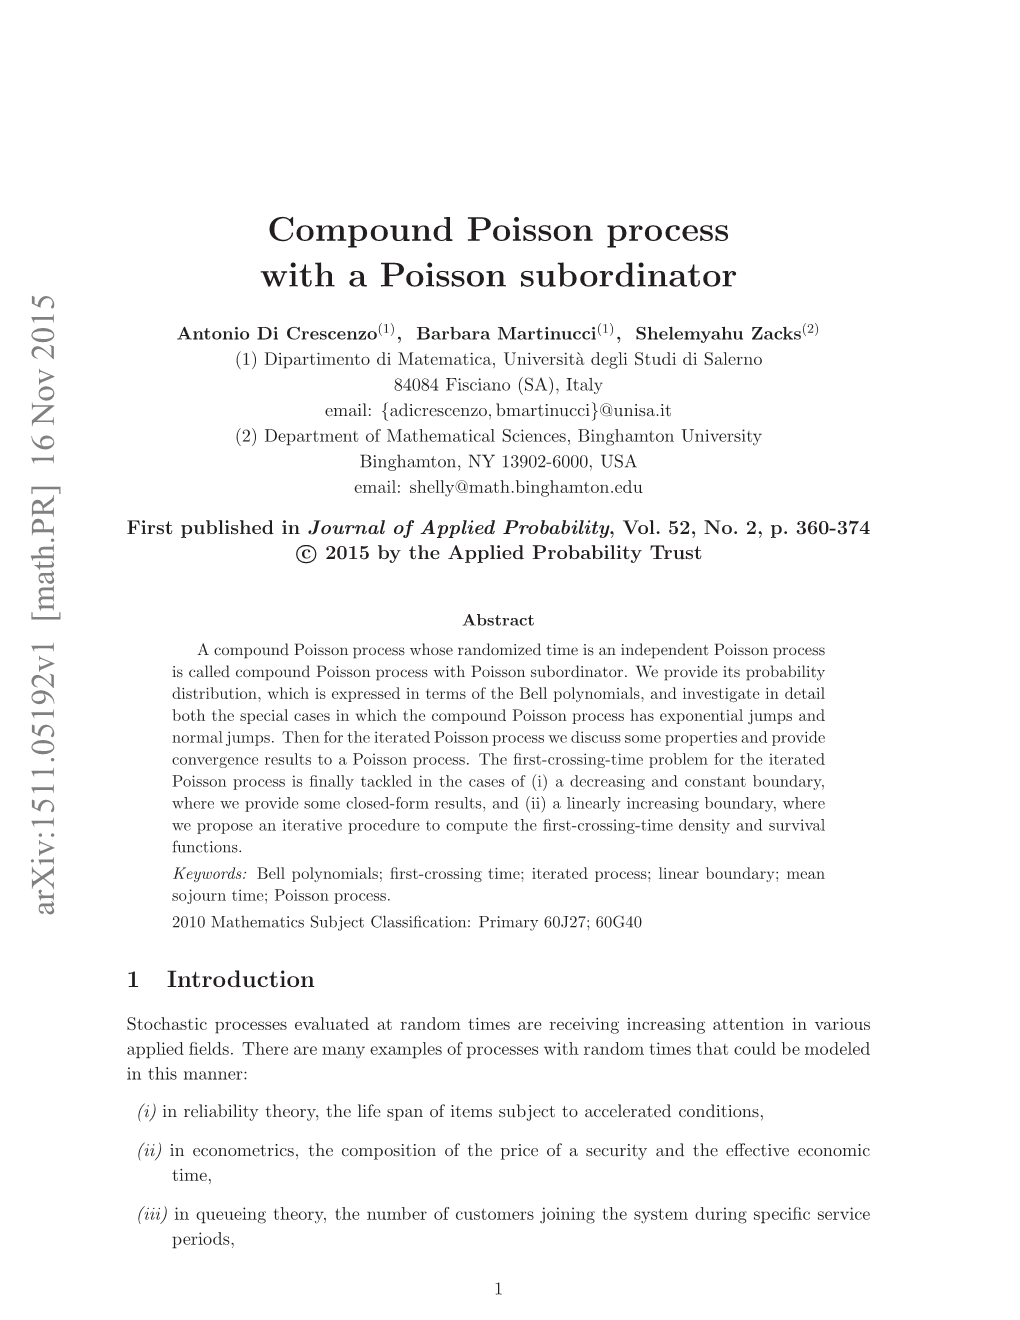 Compound Poisson Process with a Poisson Subordinator